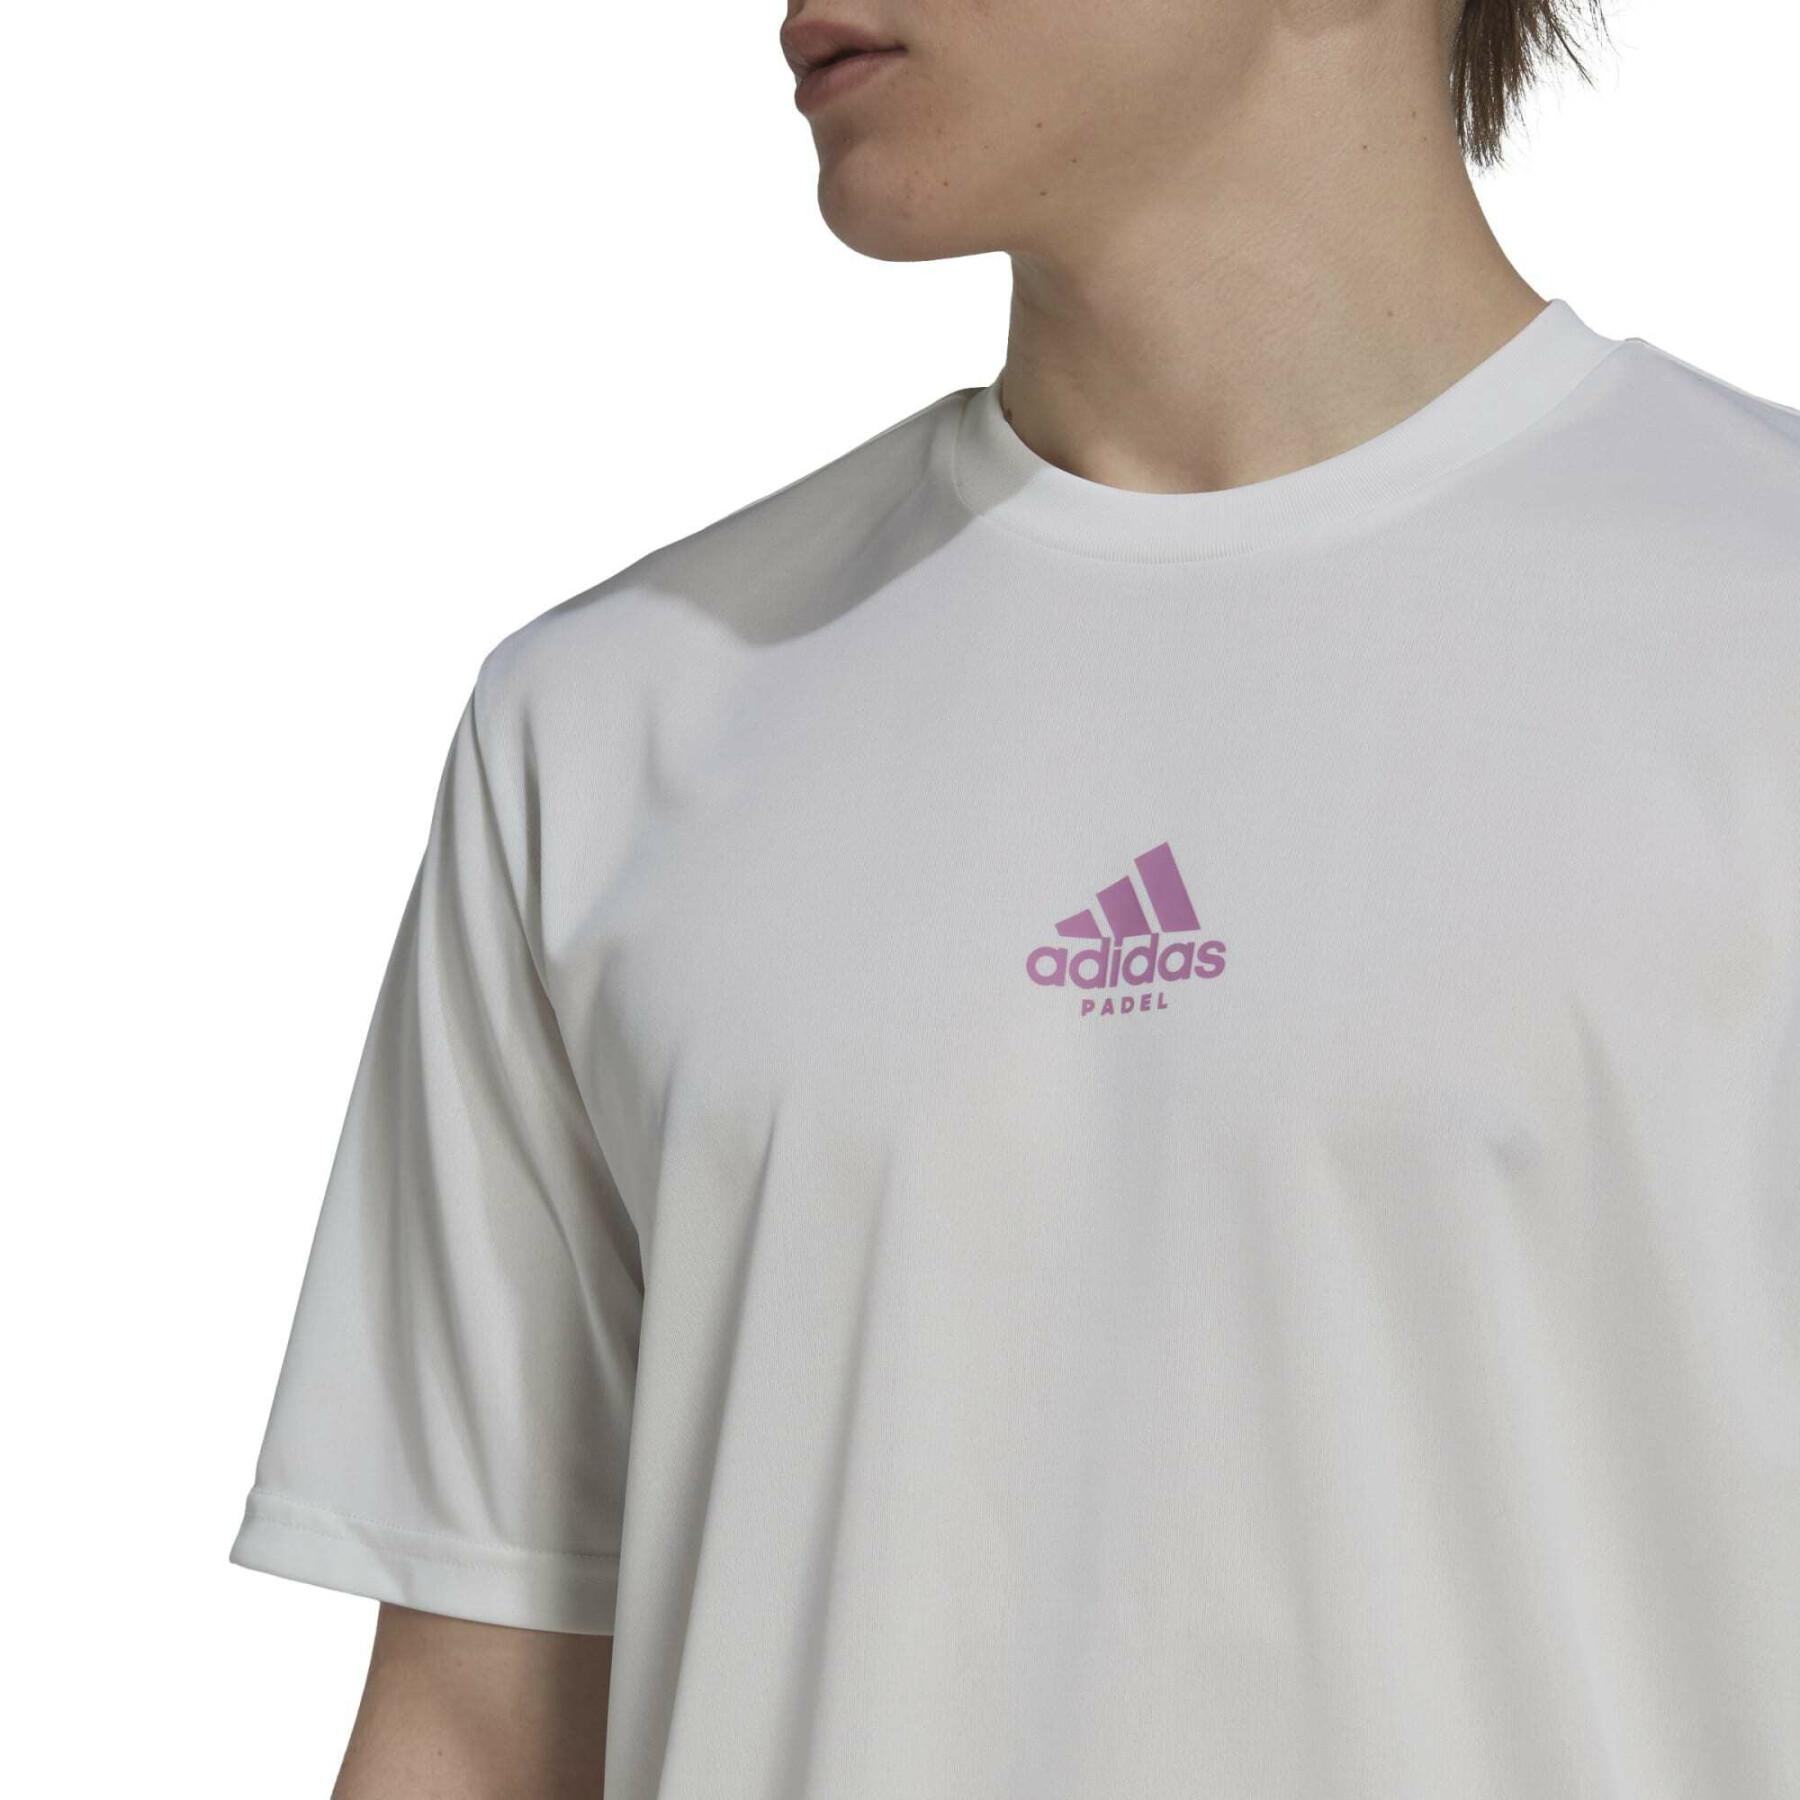 mezcla Subordinar corte largo Paddle shirt adidas - adidas - Brands - Handball wear